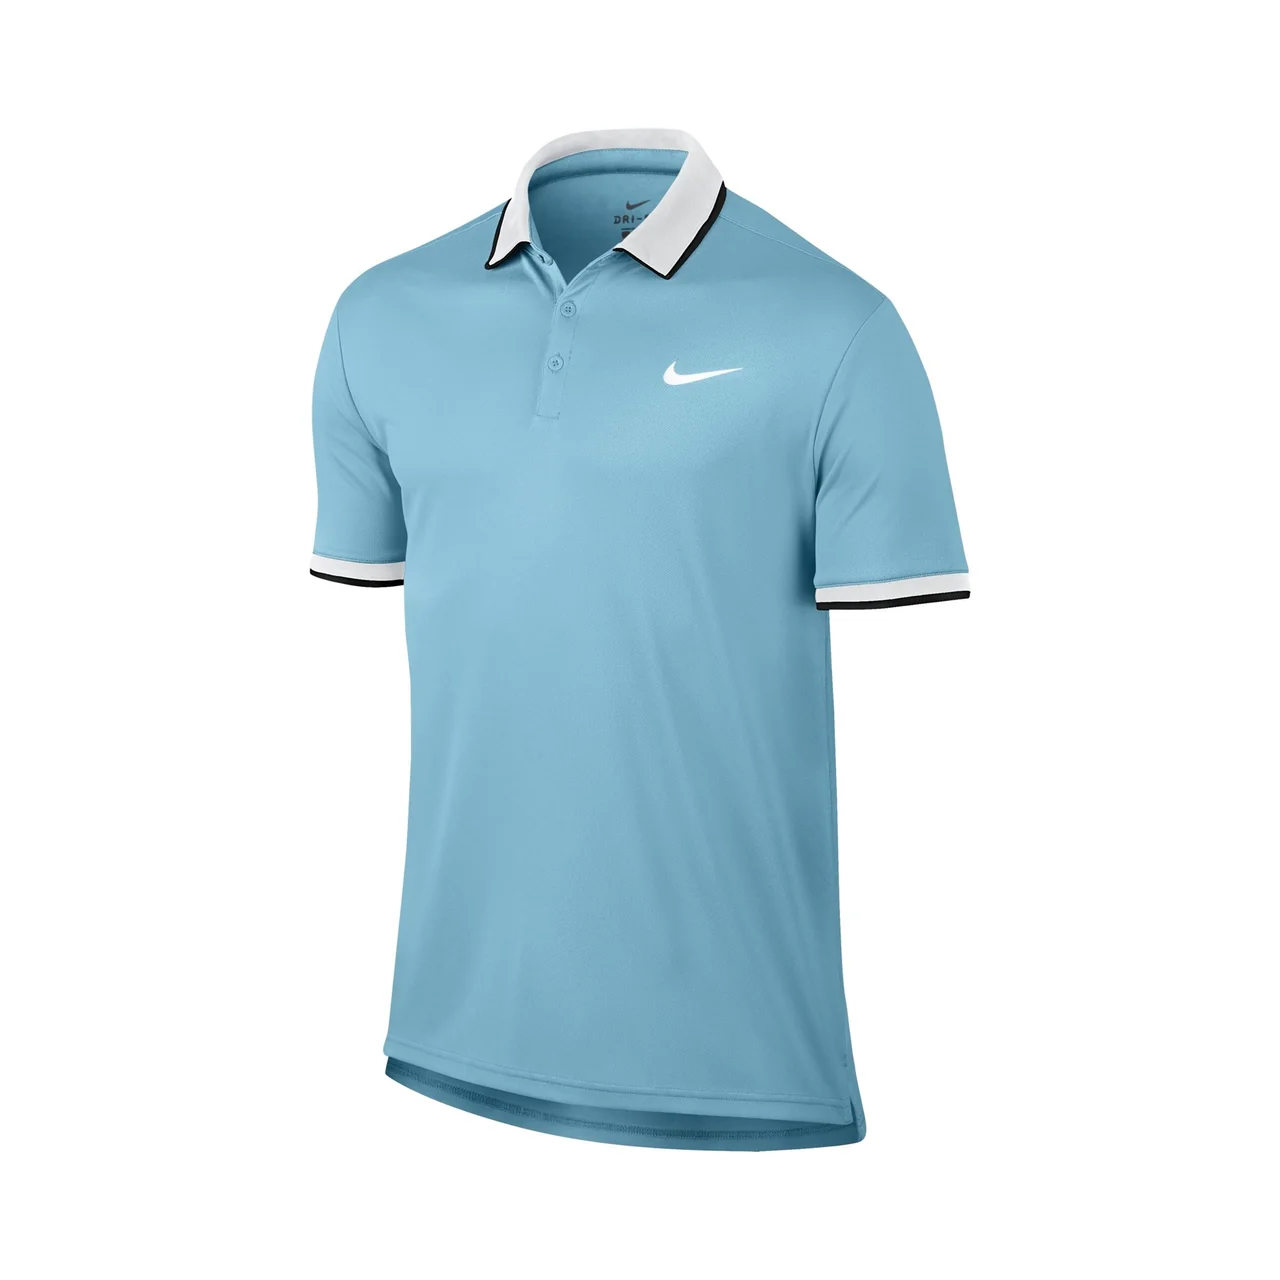 Nike Dry Team Polo Light Blue Size S